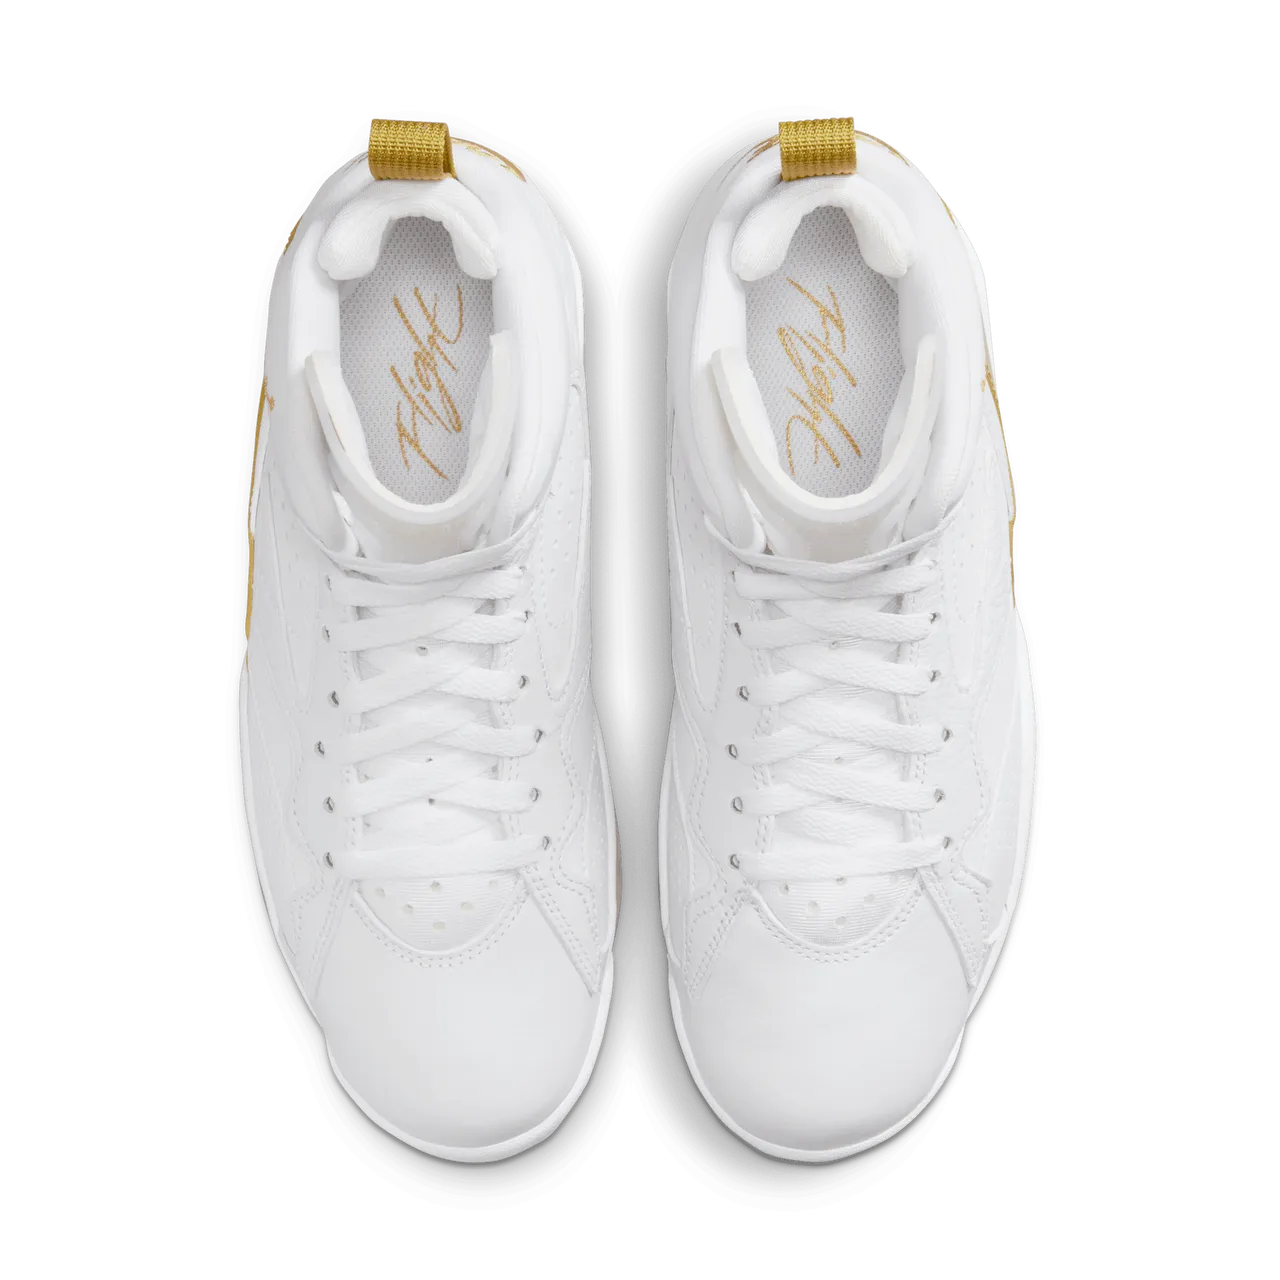 Jordan MVP Women's Shoes - White - Leather